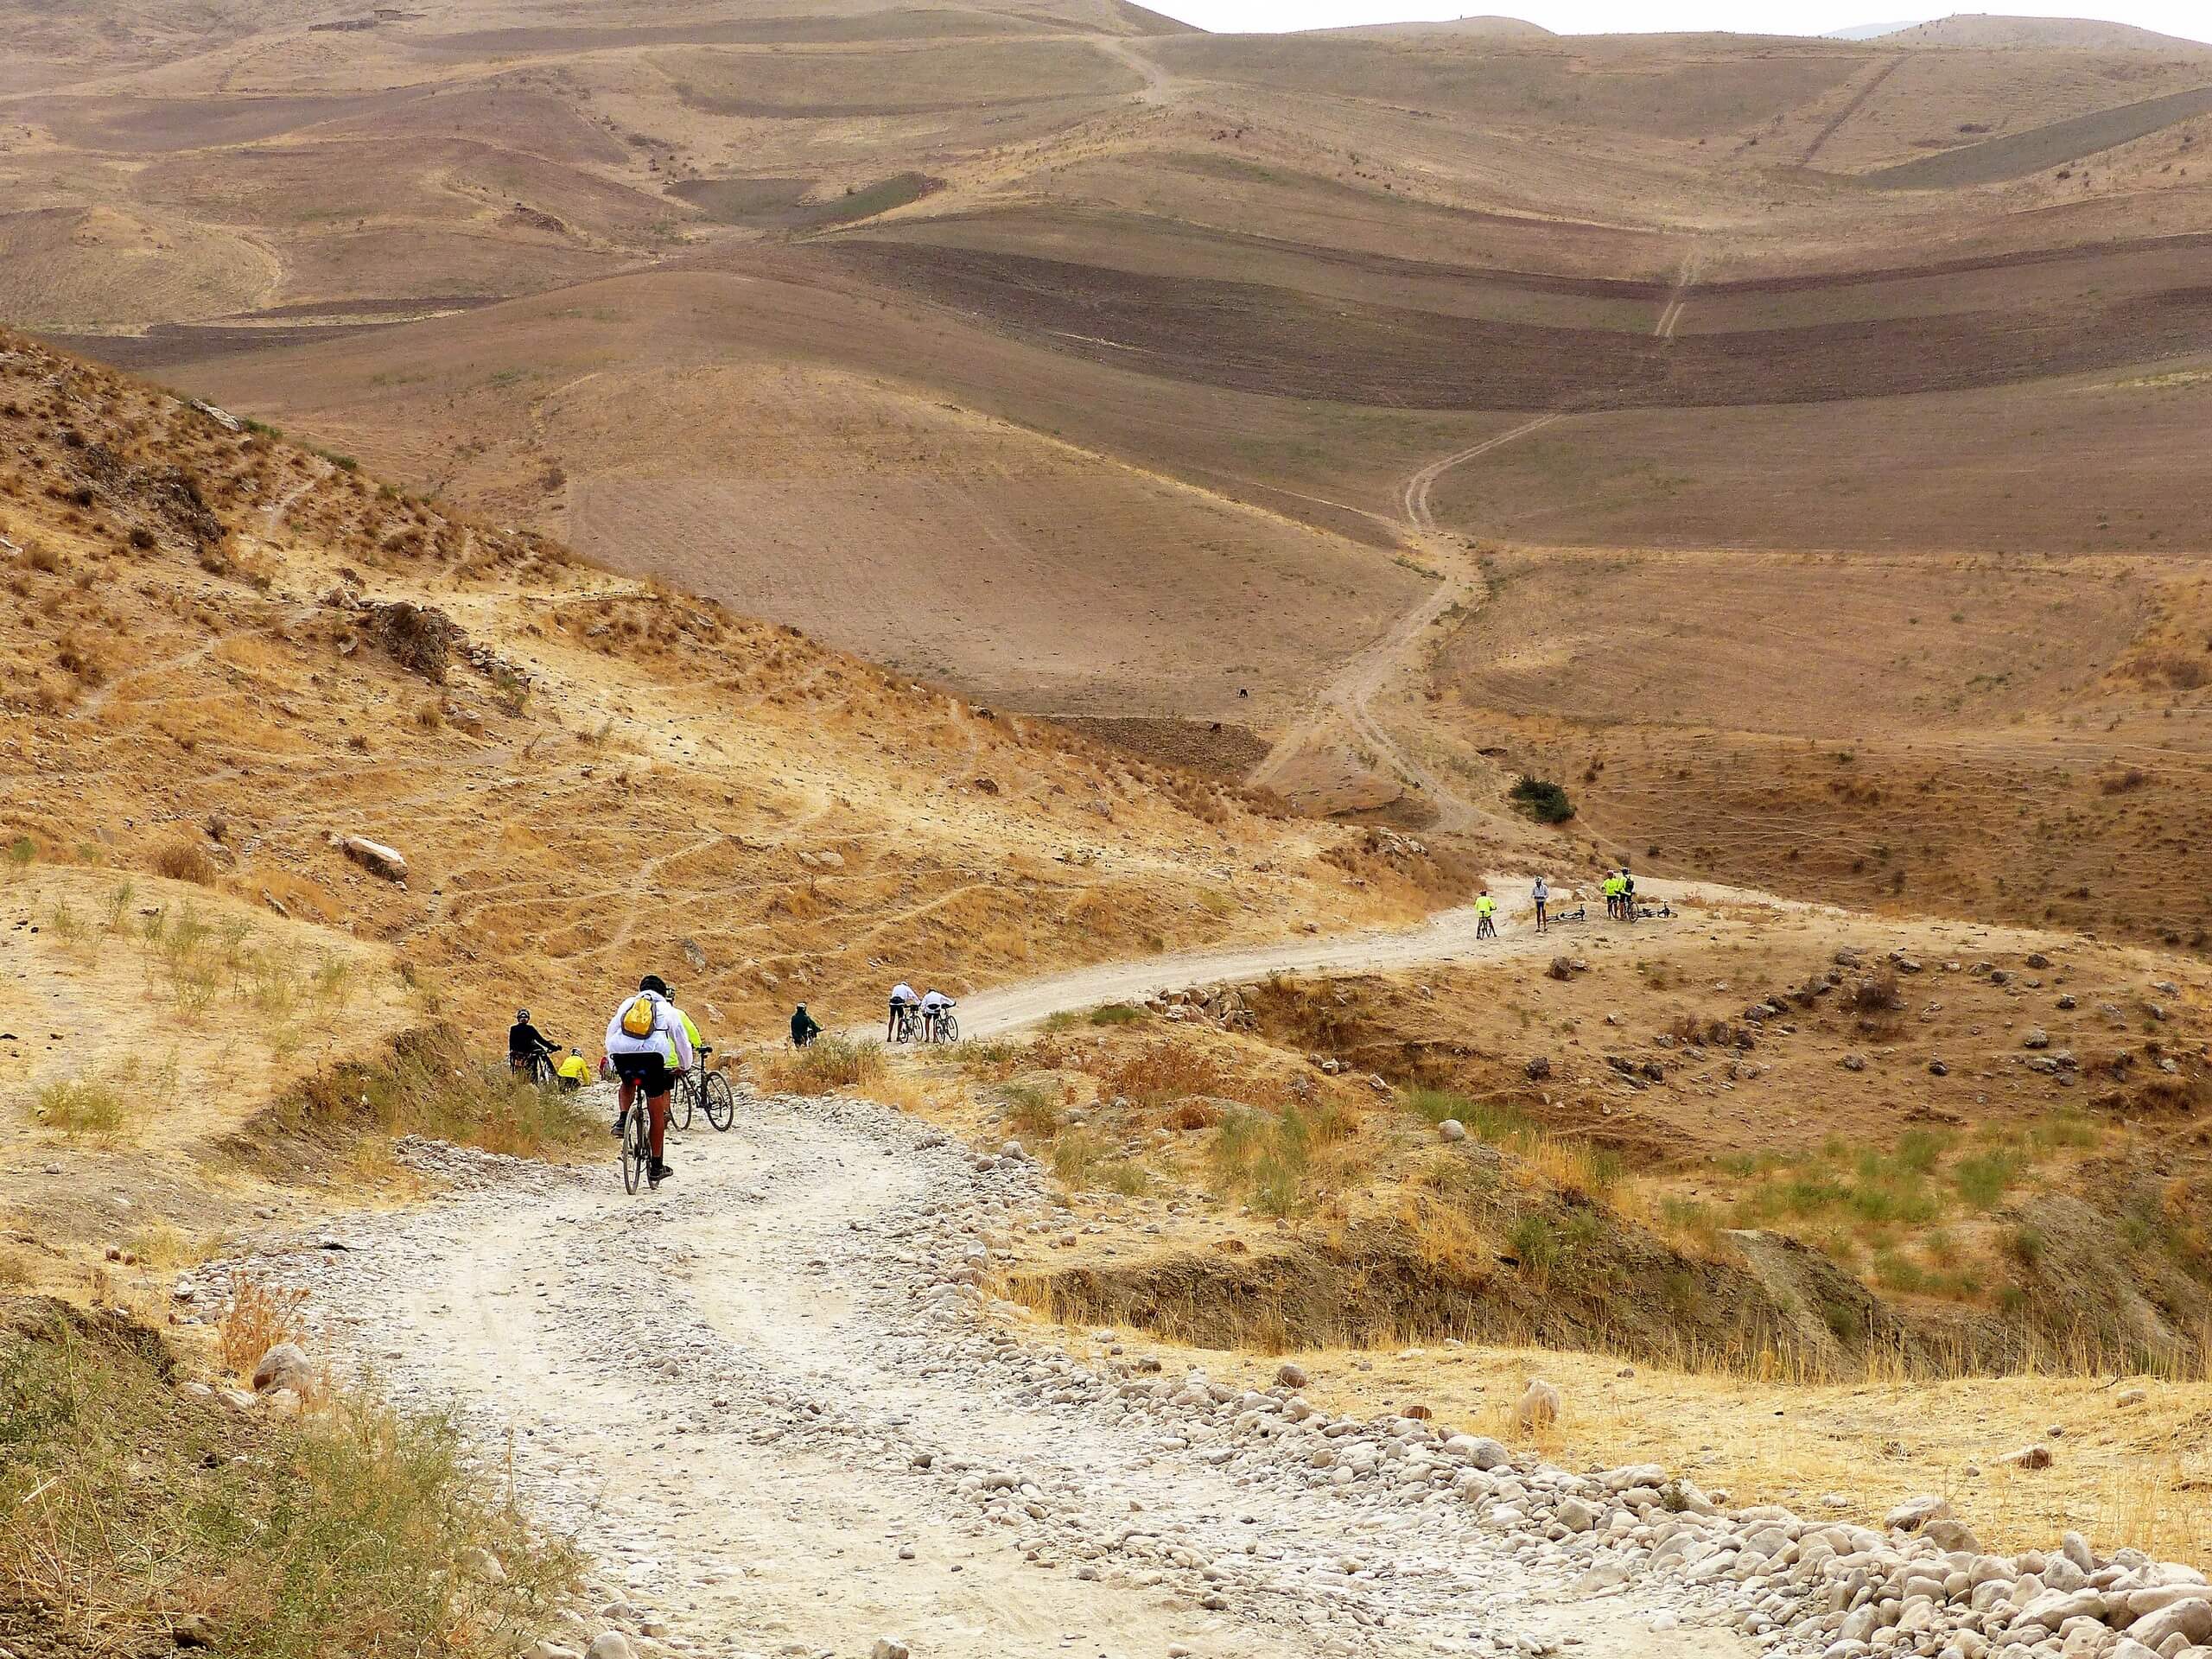 Gravel road down the hill in Uzbekistan